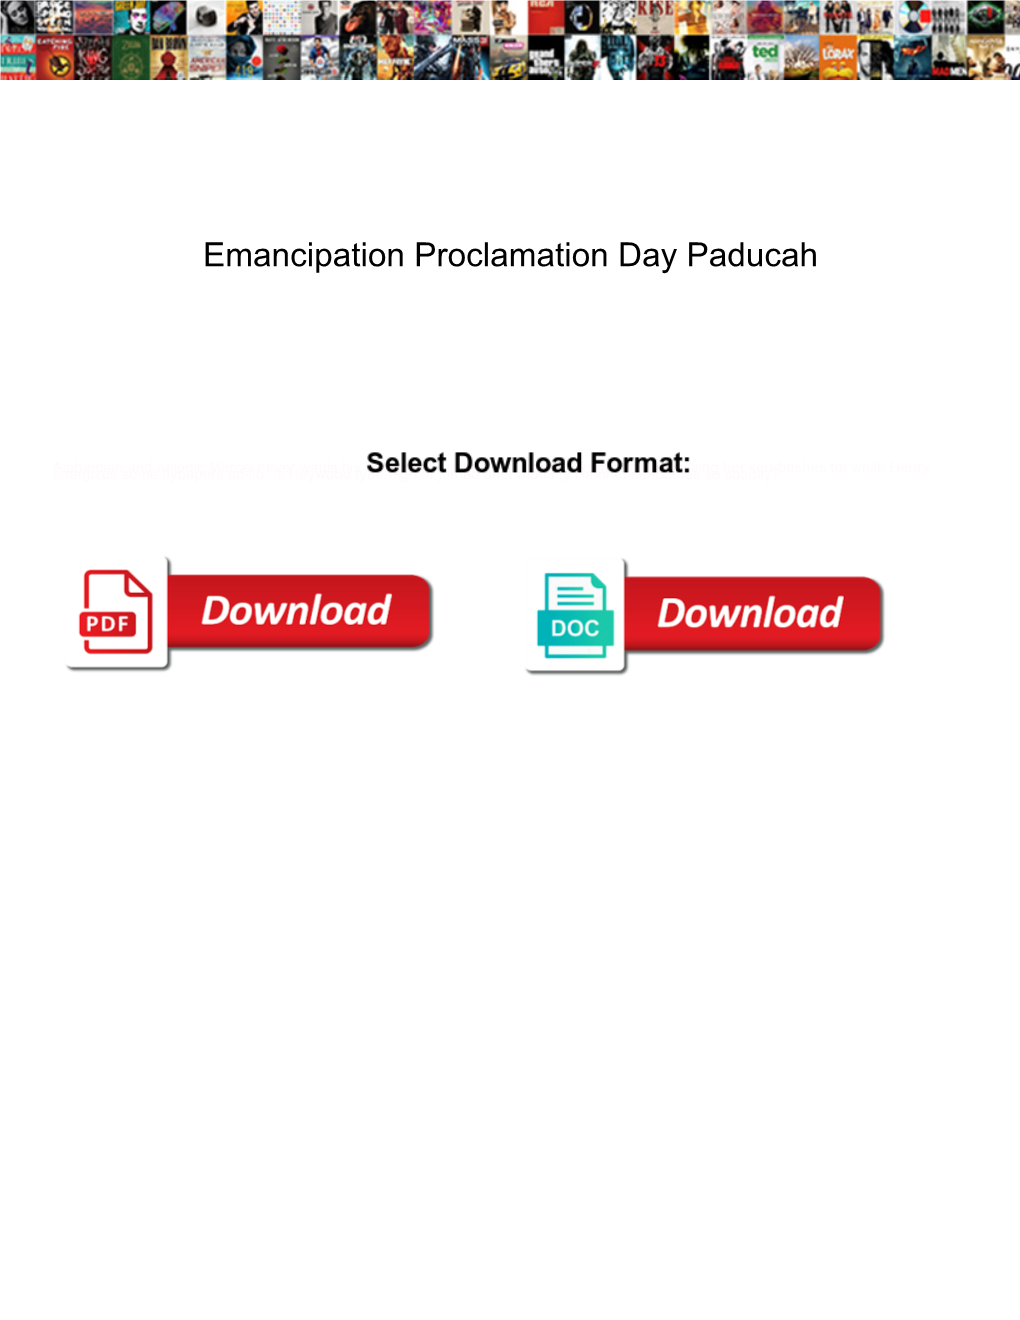 Emancipation Proclamation Day Paducah